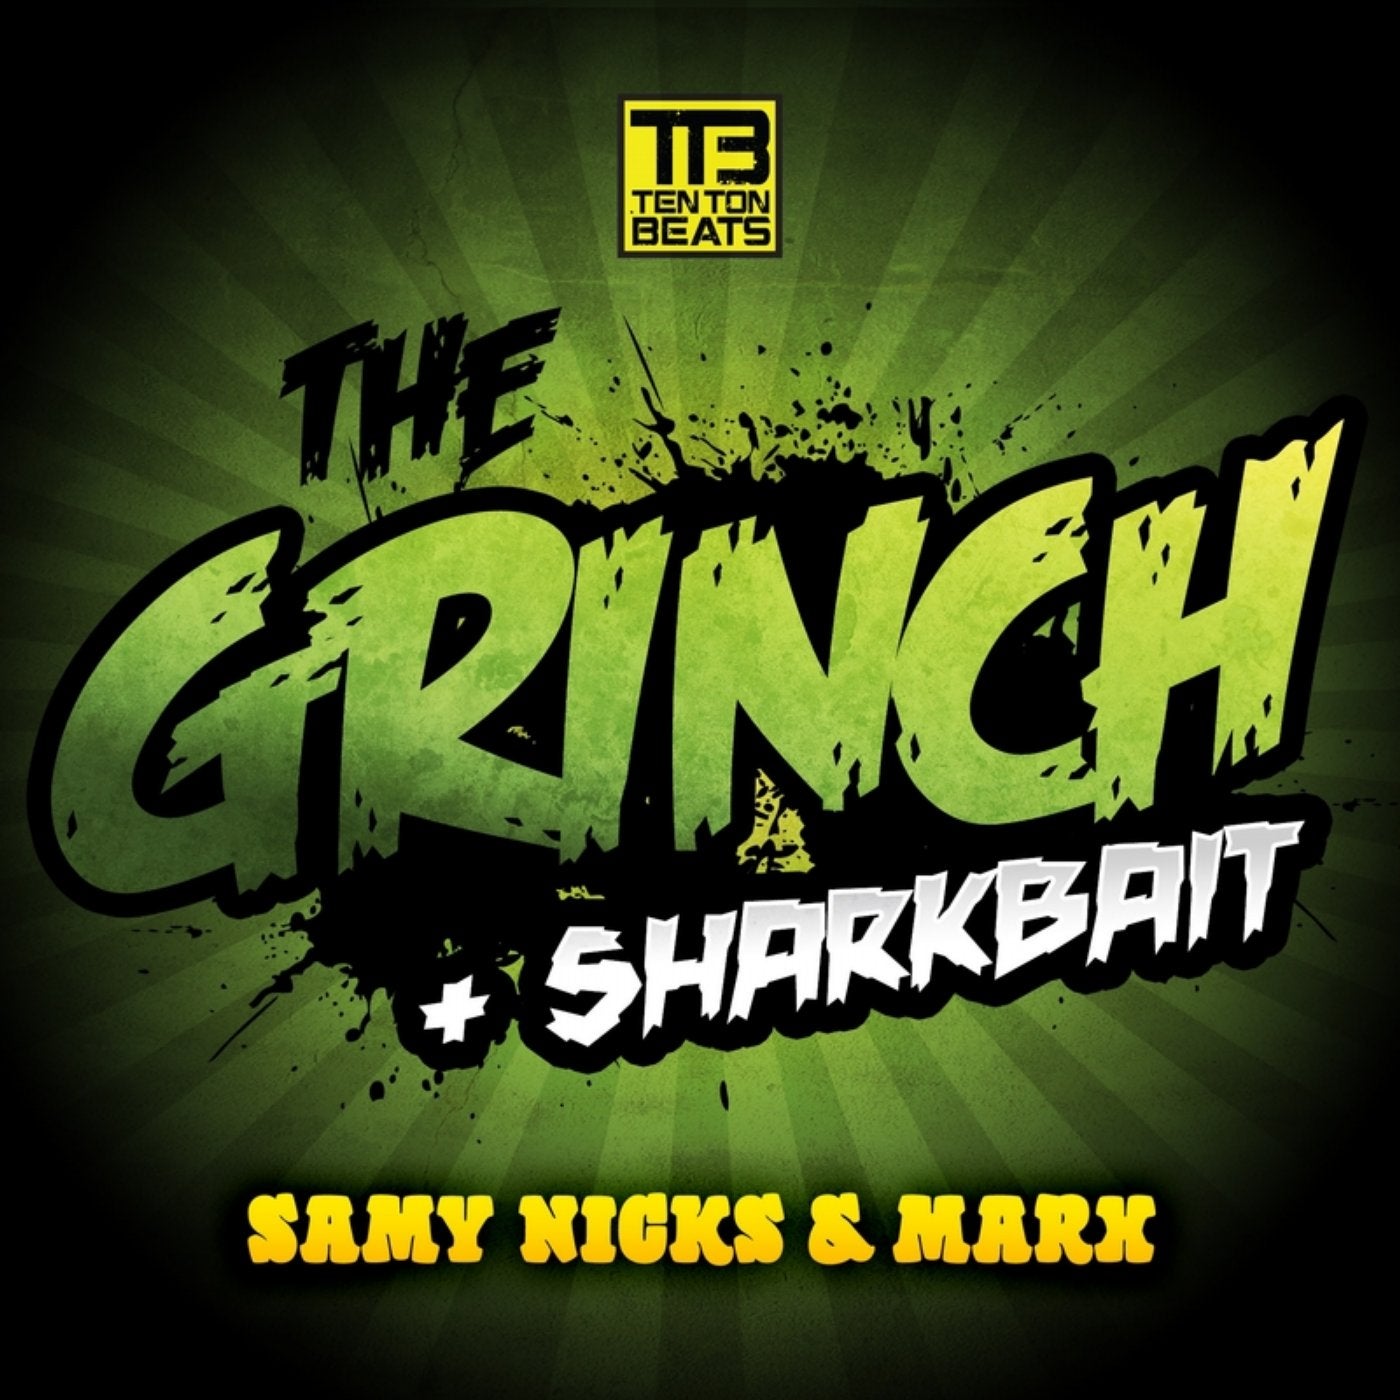 The Grinch / Sharkbait